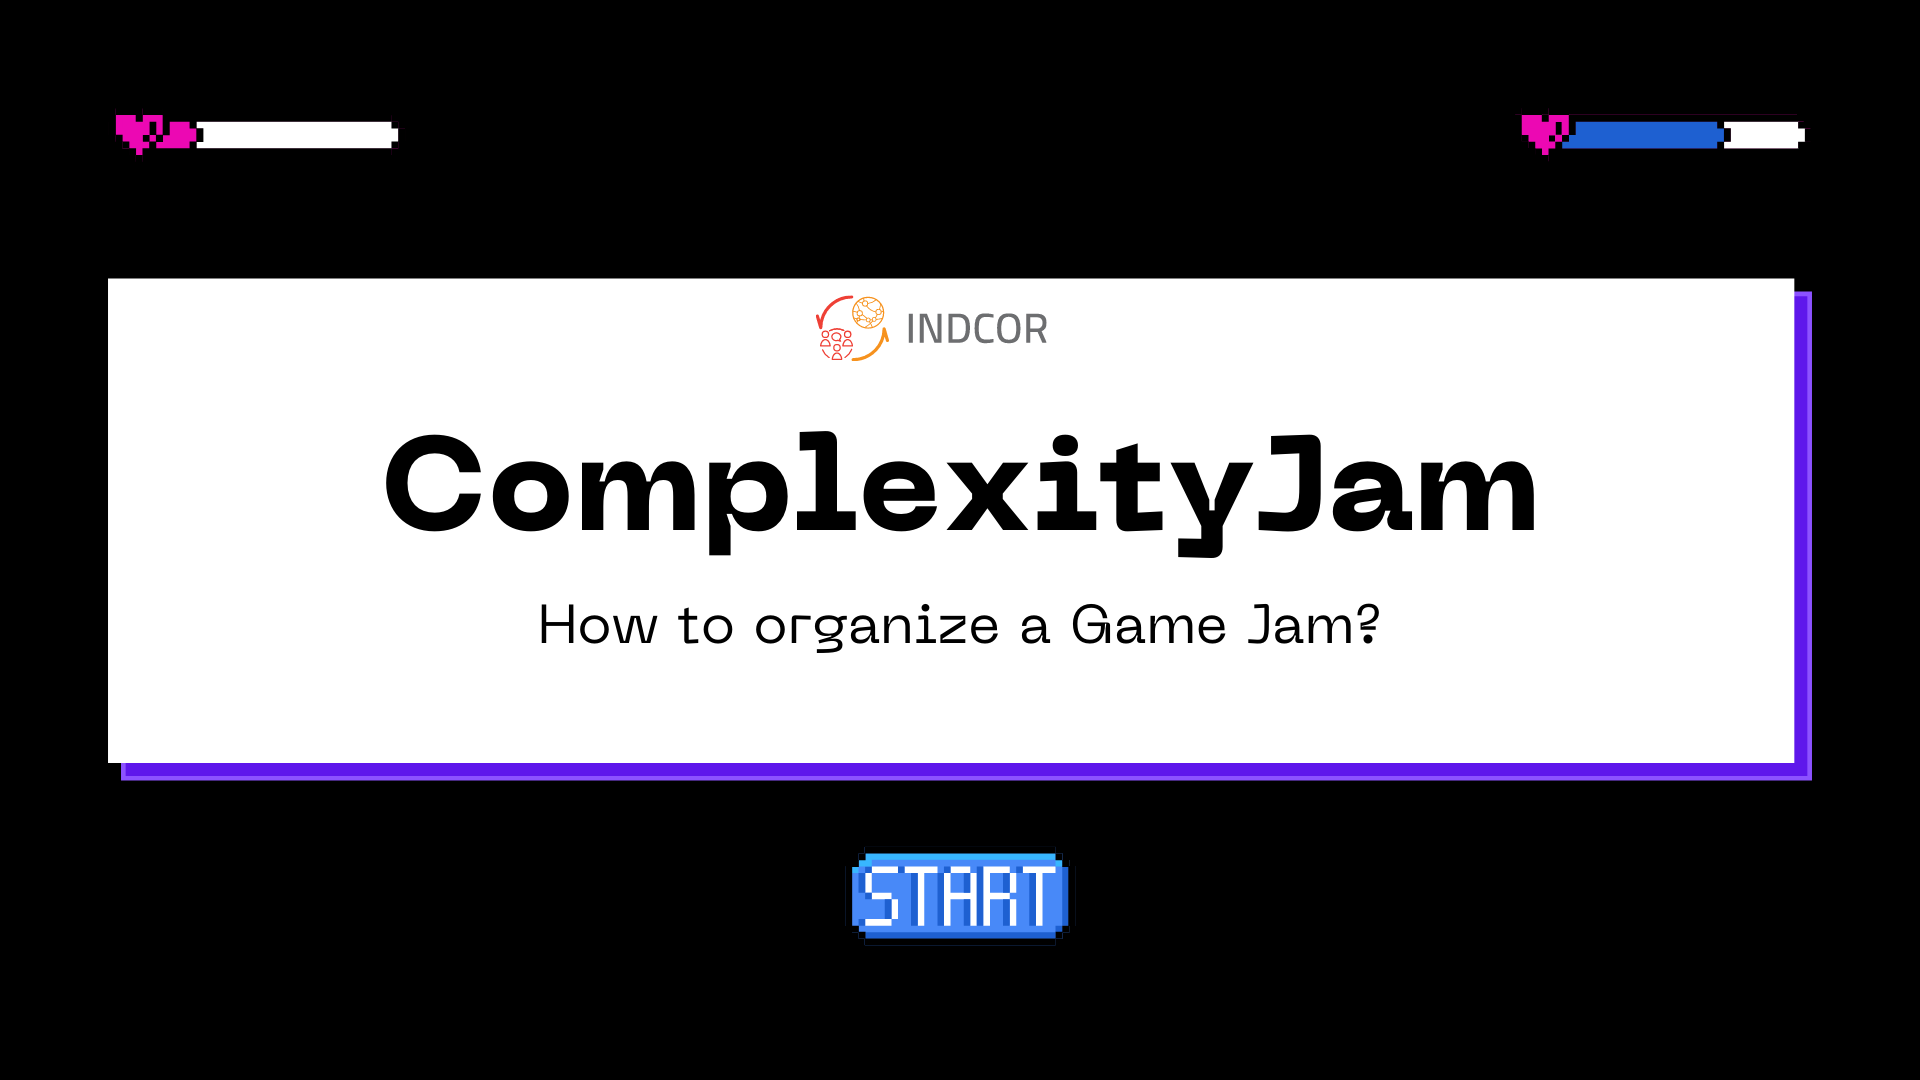 ComplexityJam